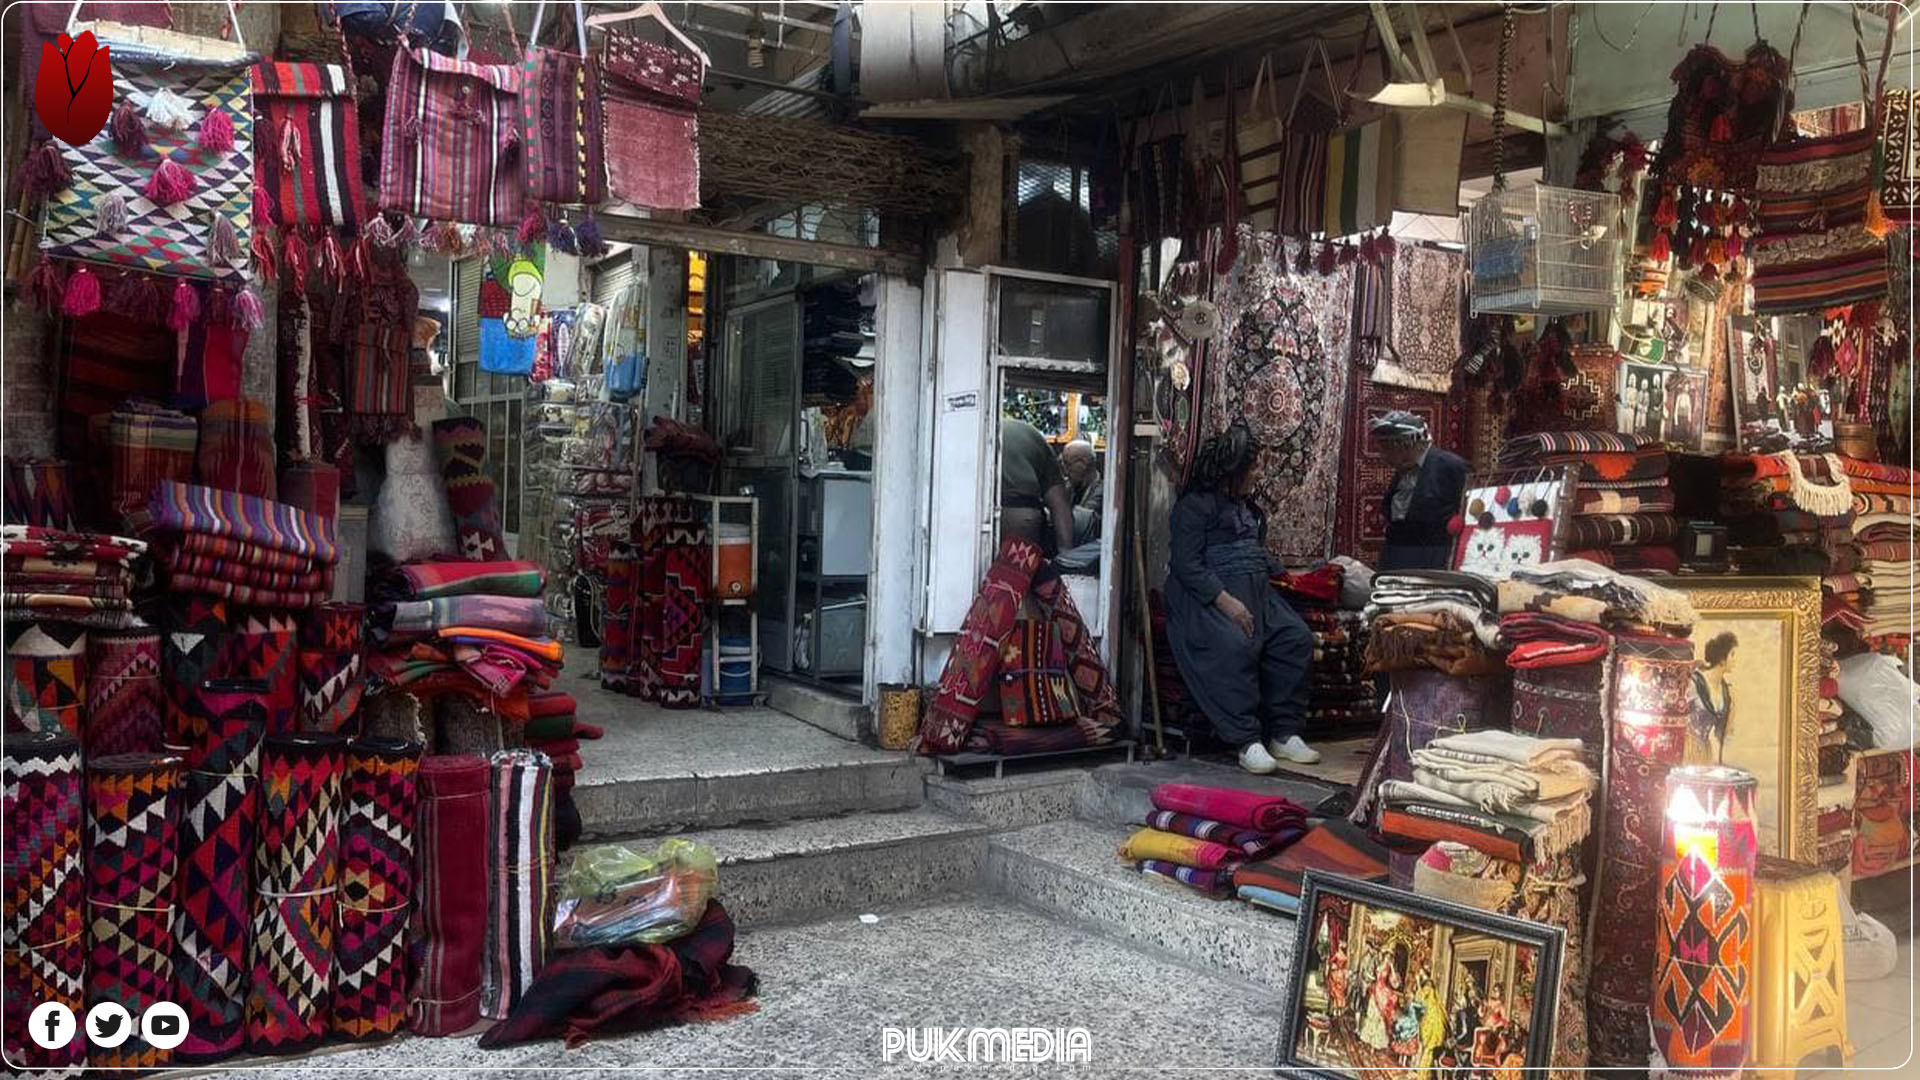 Rug Market And Traditional Kurdish Jajims, The Rug Market